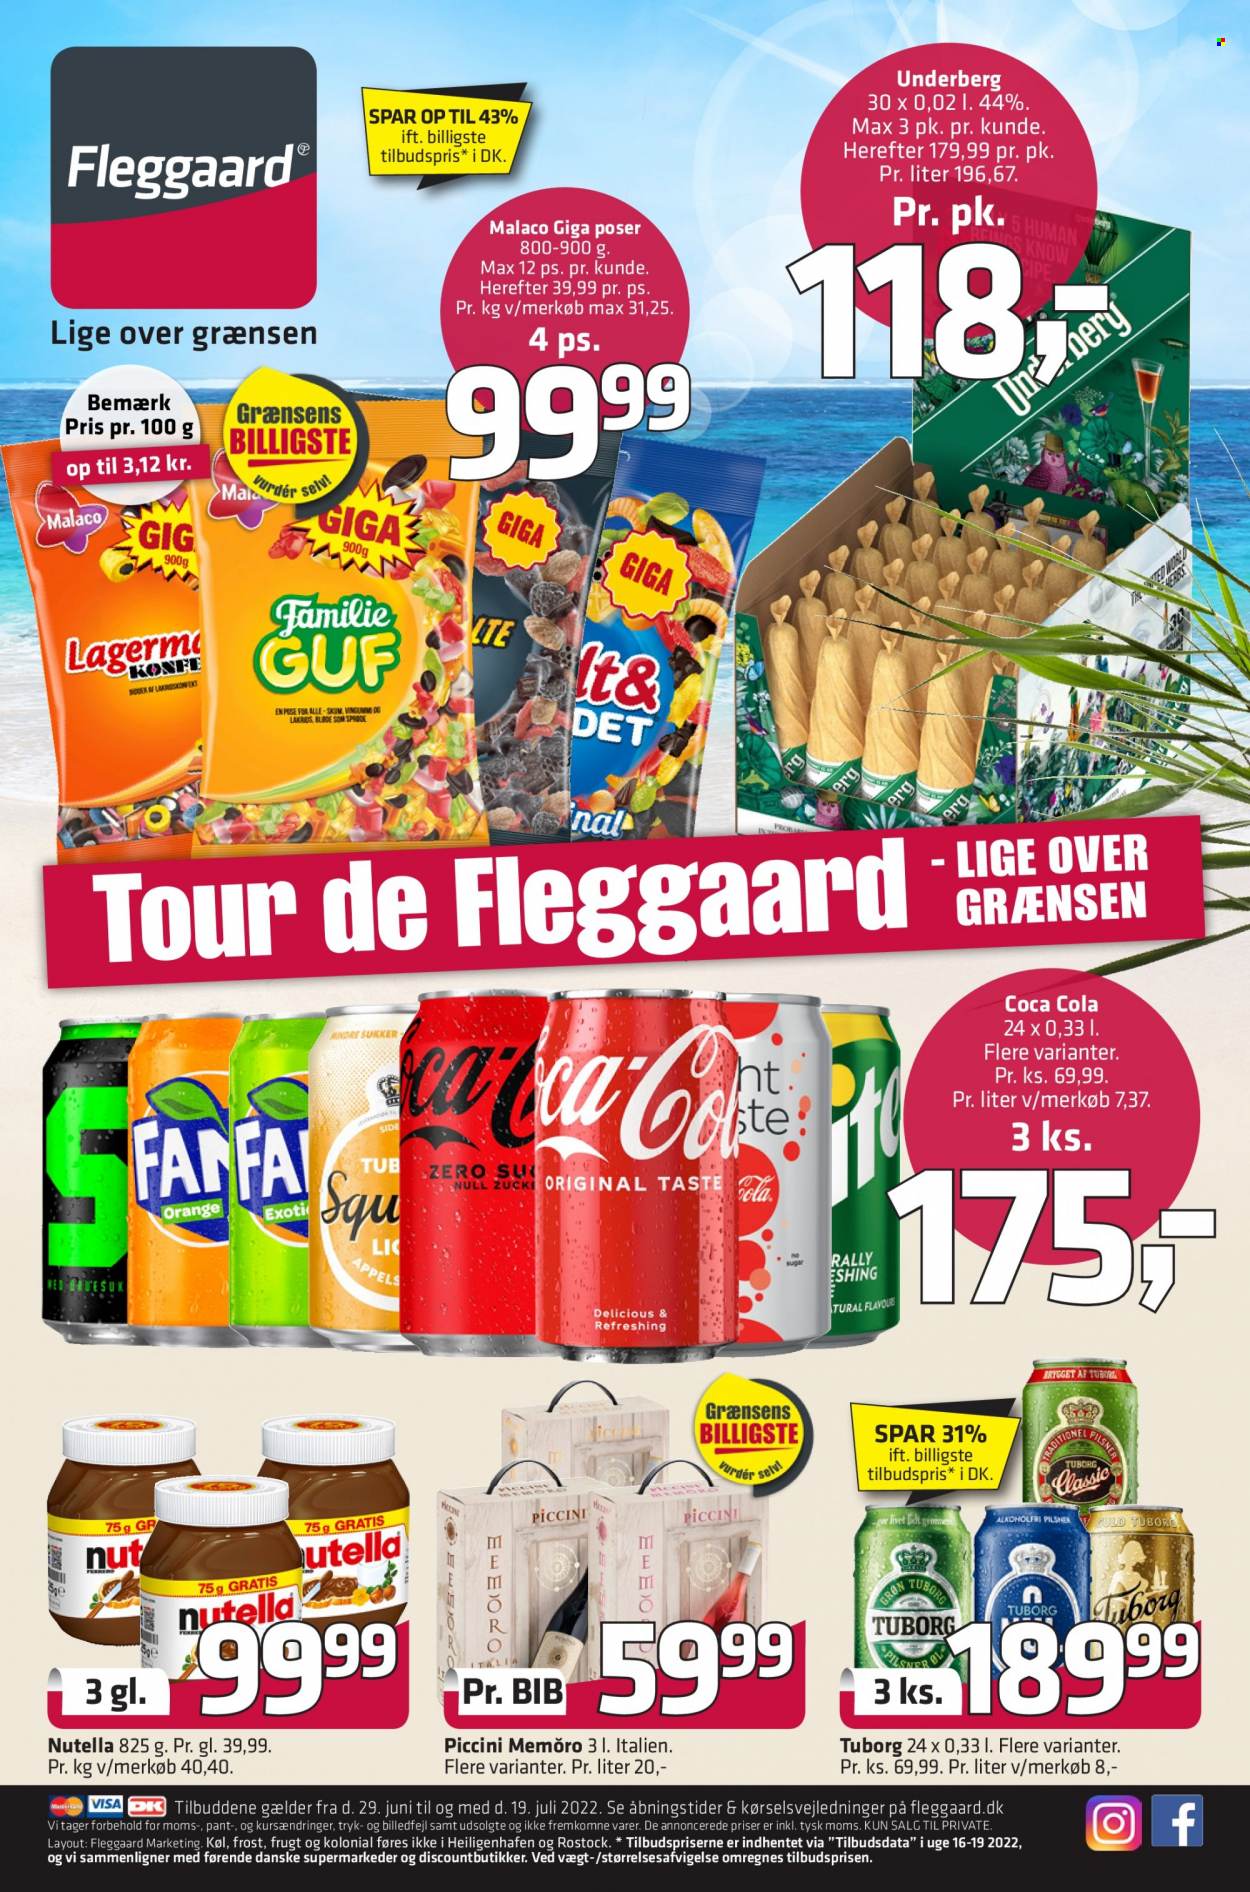 thumbnail - Fleggaard reklamblad - 29/6 2022 - 19/7 2022 - varor från reklamblad - Tuborg, Nutella, Coca-Cola, Underberg, Via. Sida 1.